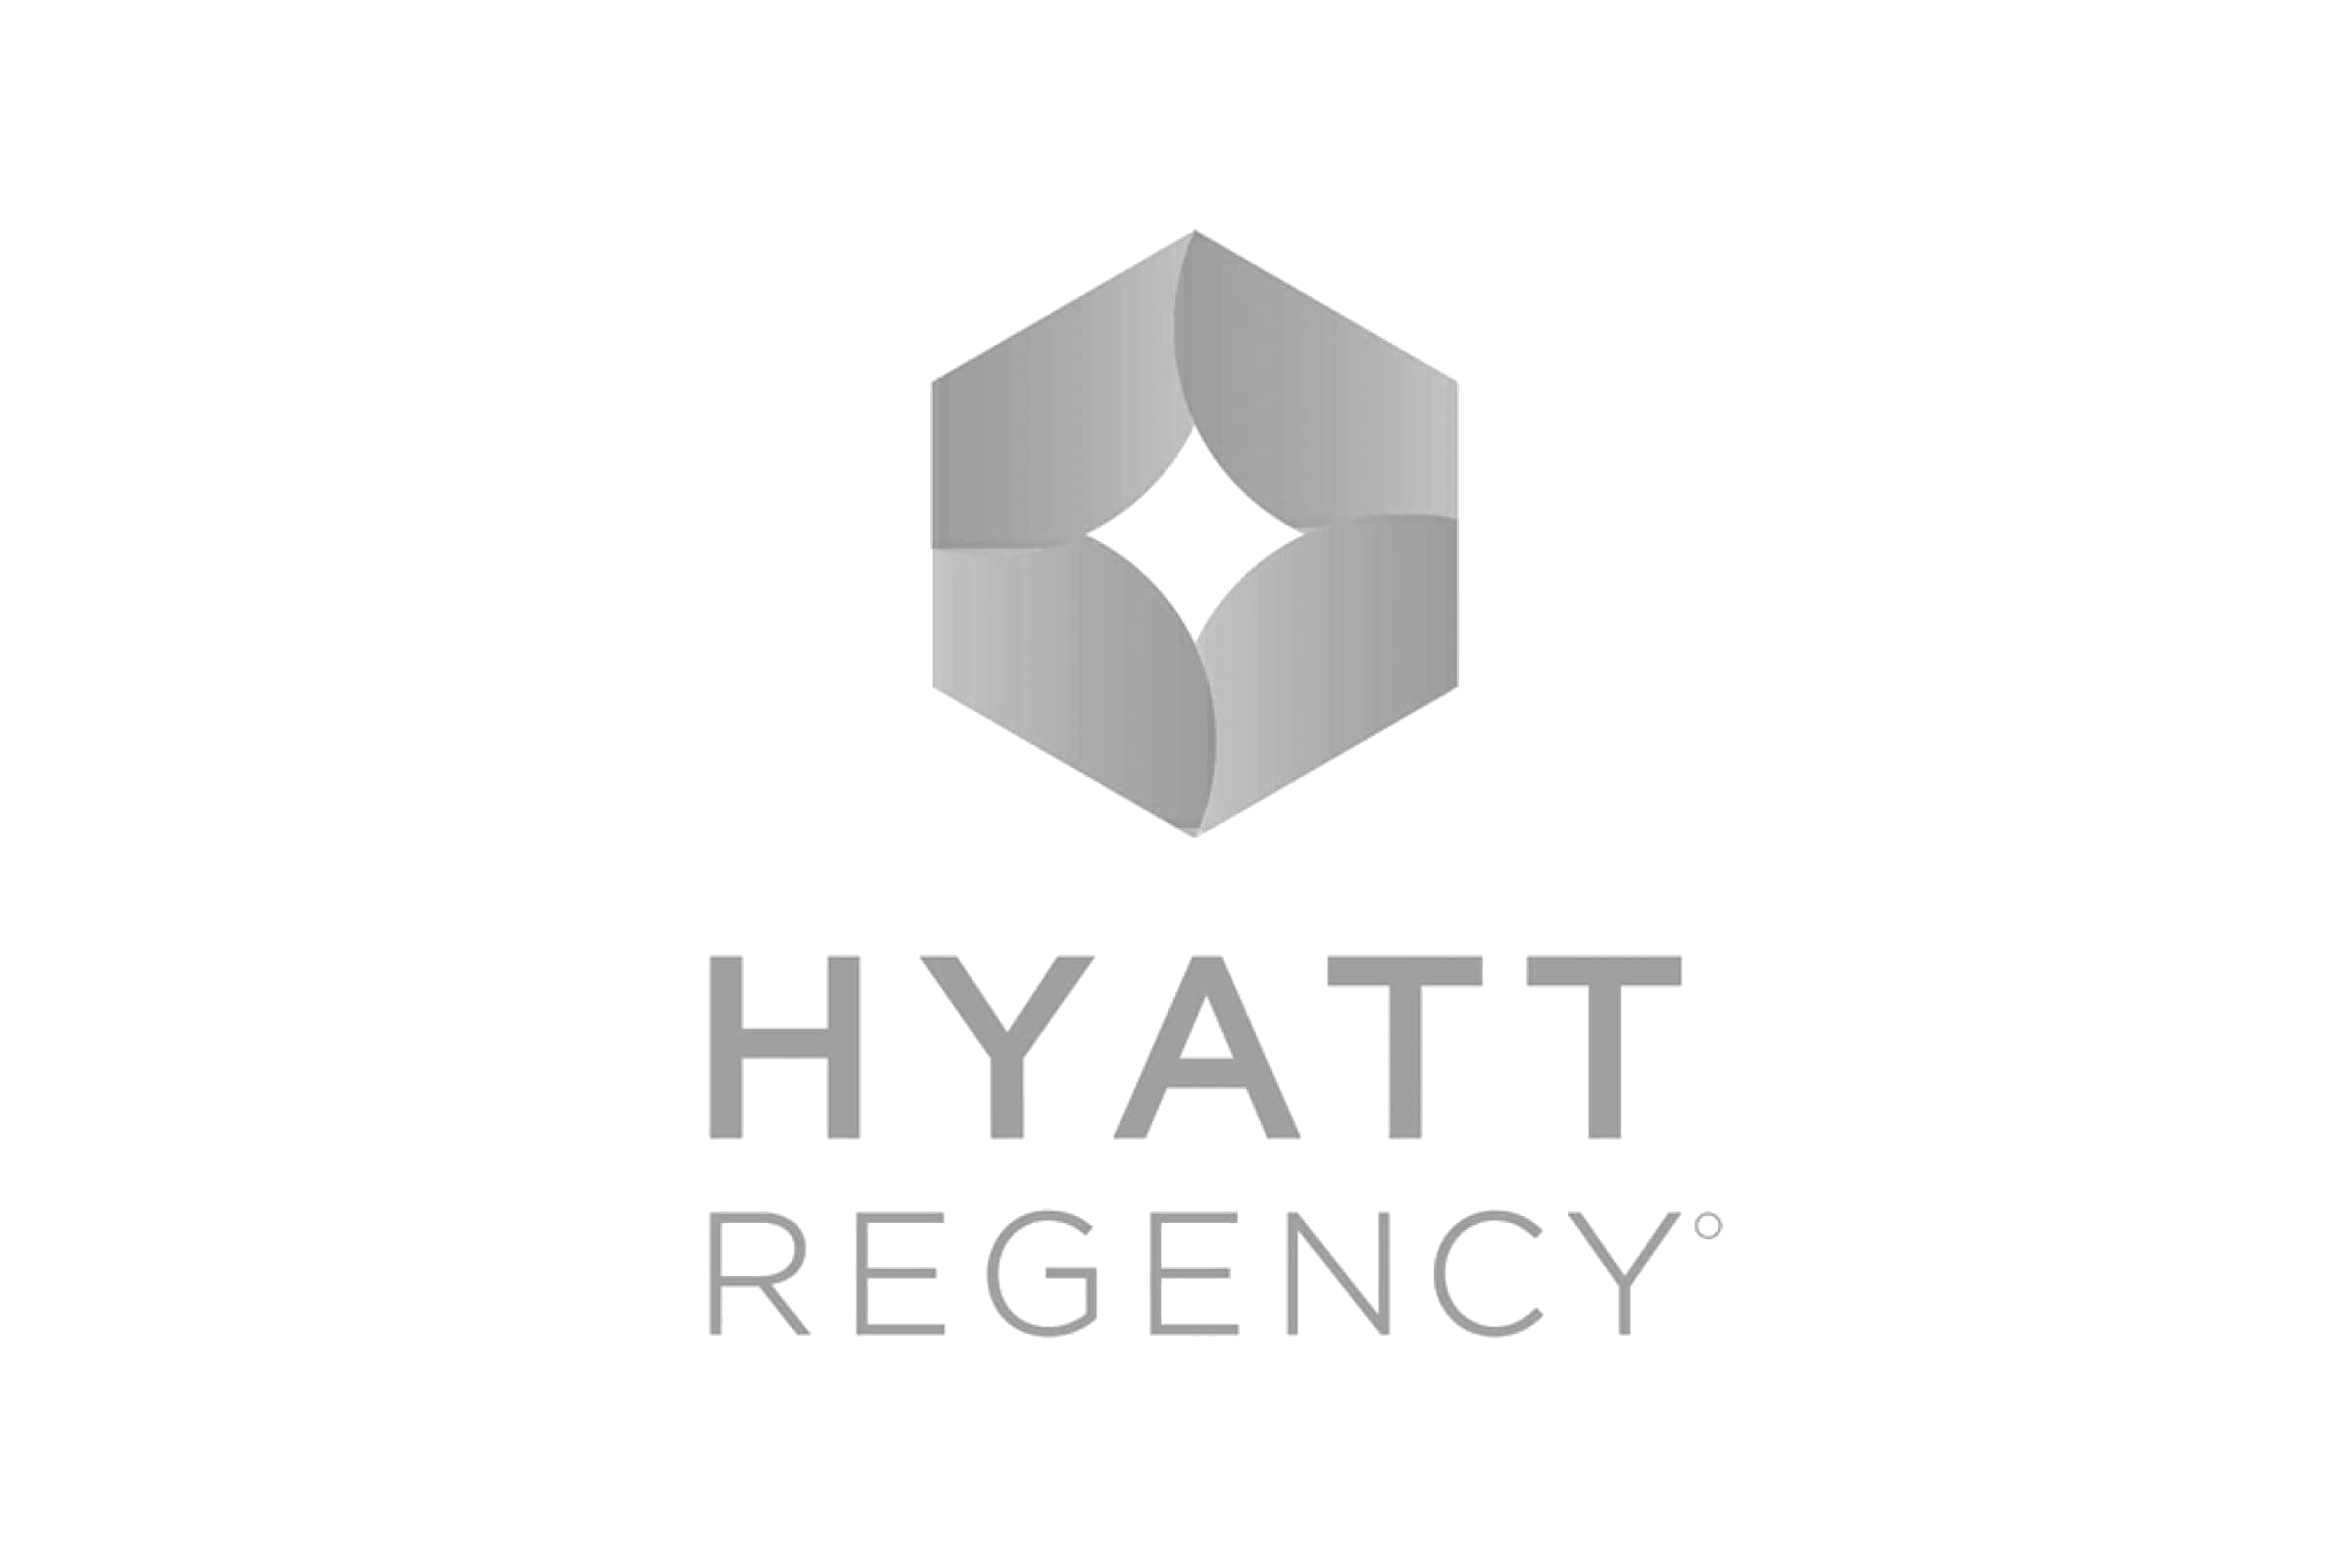 HOS - Hyatt Regency - 03.png